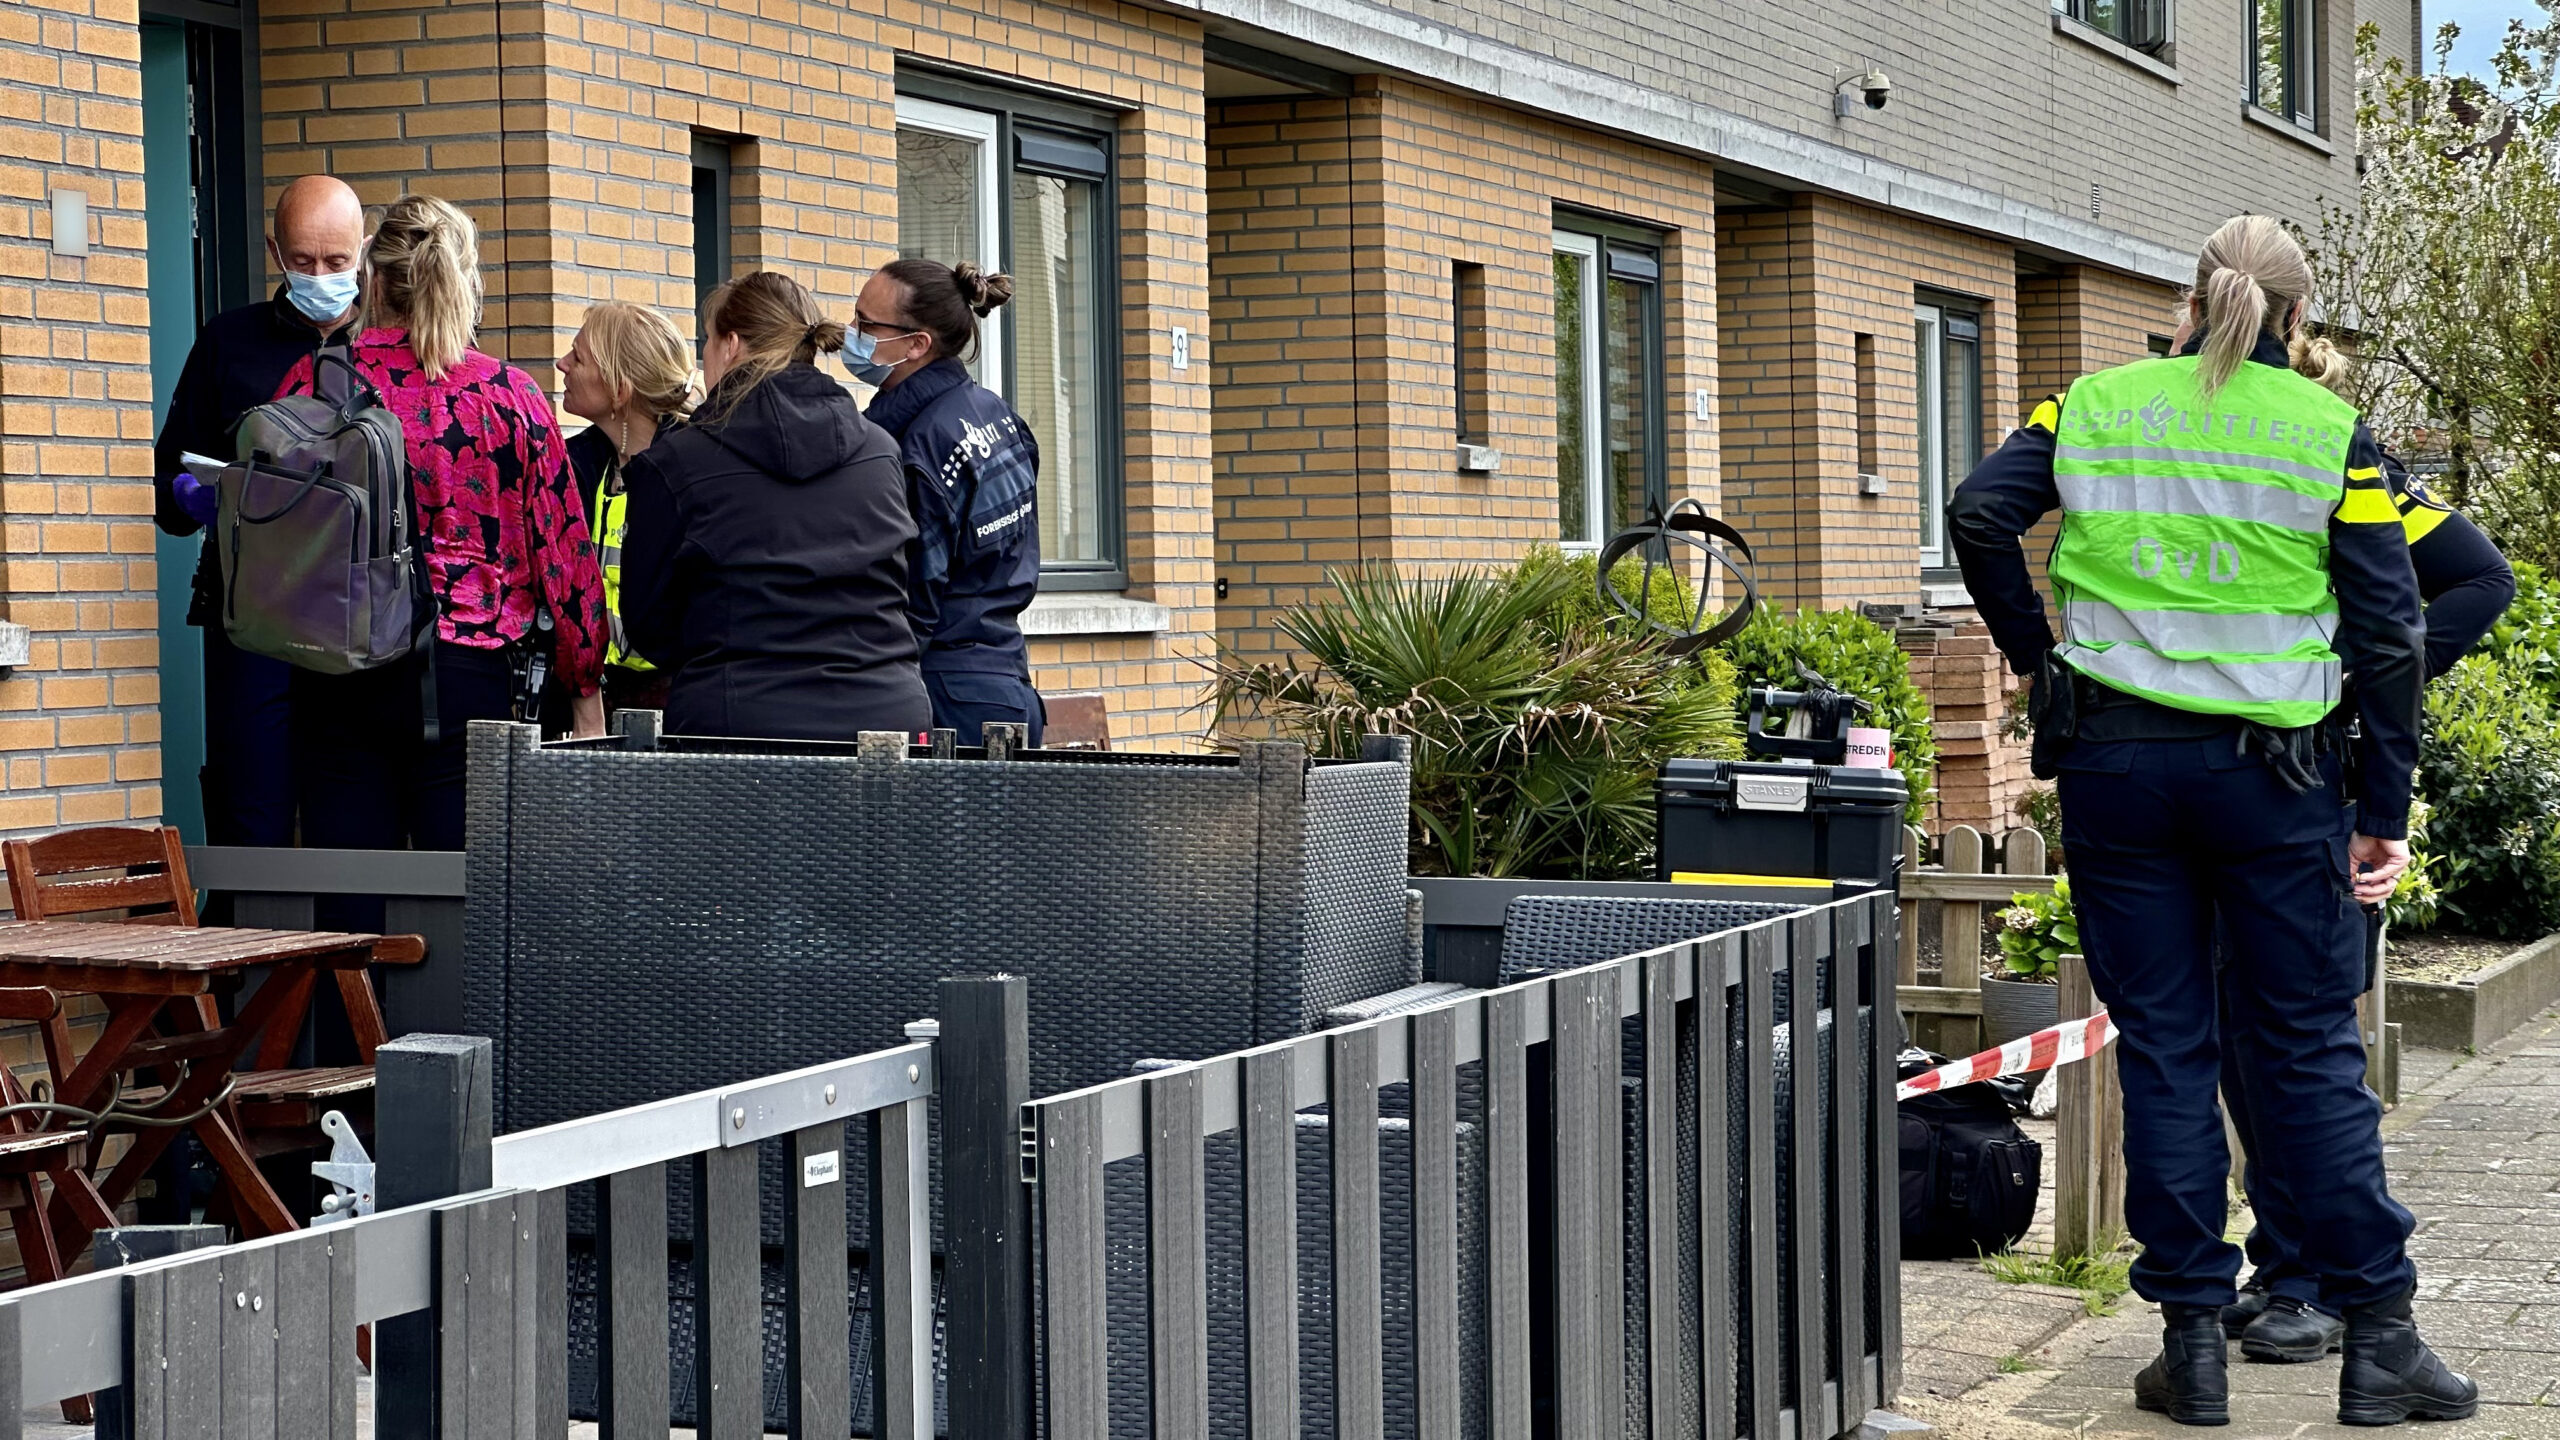 Woningoverval in Arnhem: politie zoekt man met opvallend signalement